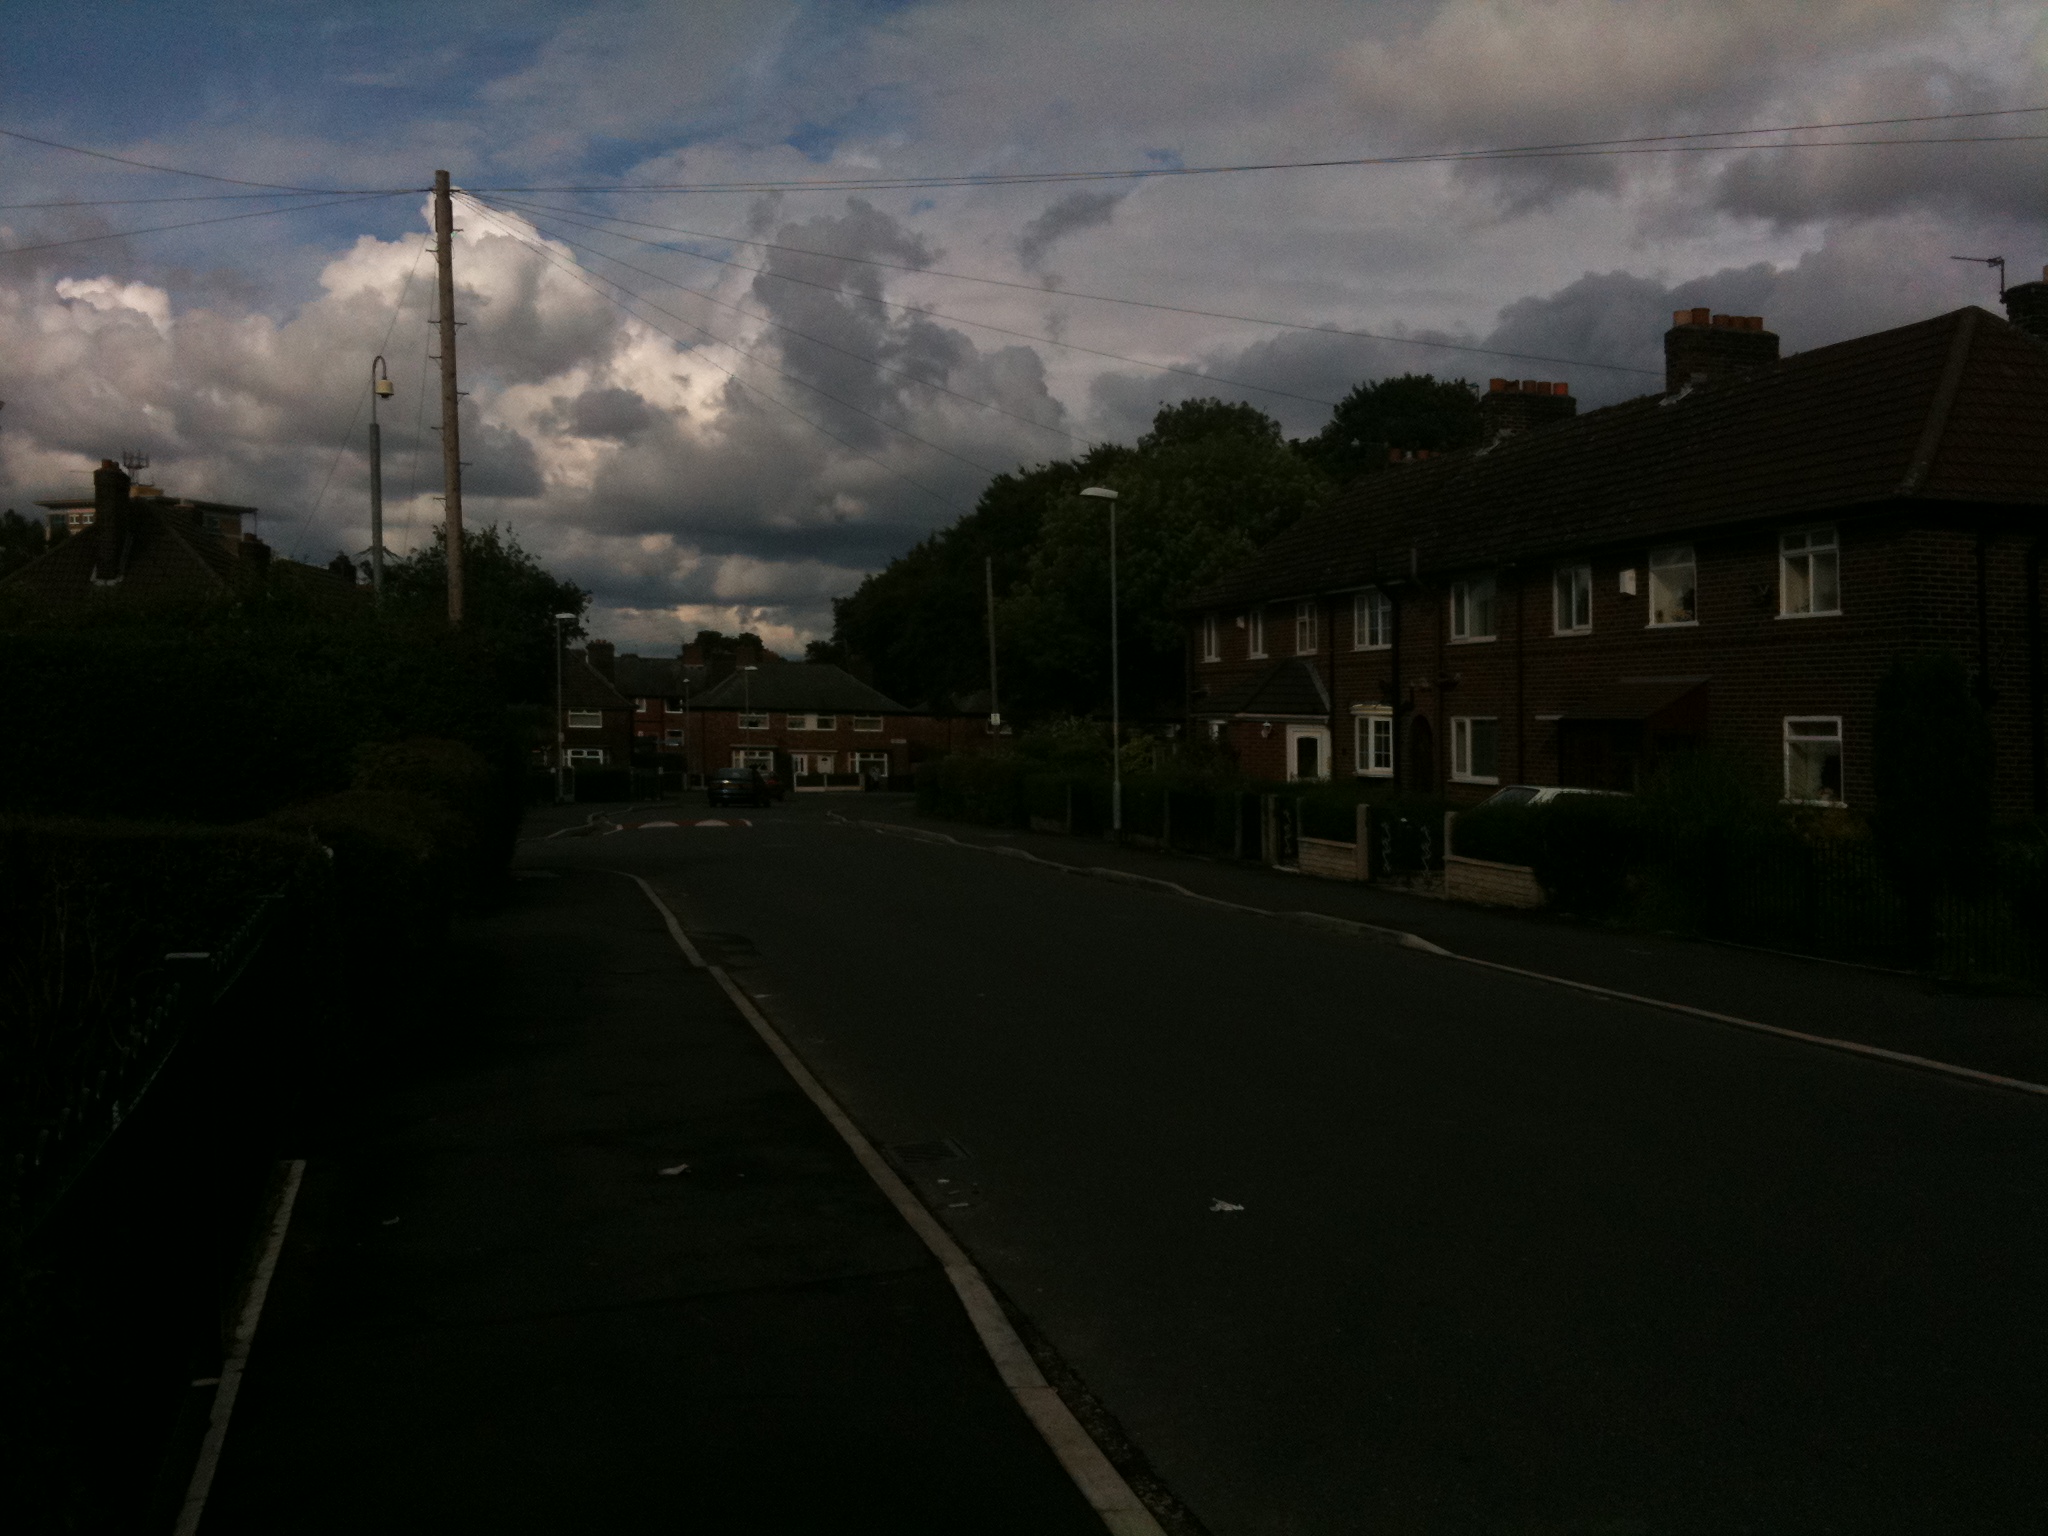 a dark street with a cloudy sky over houses